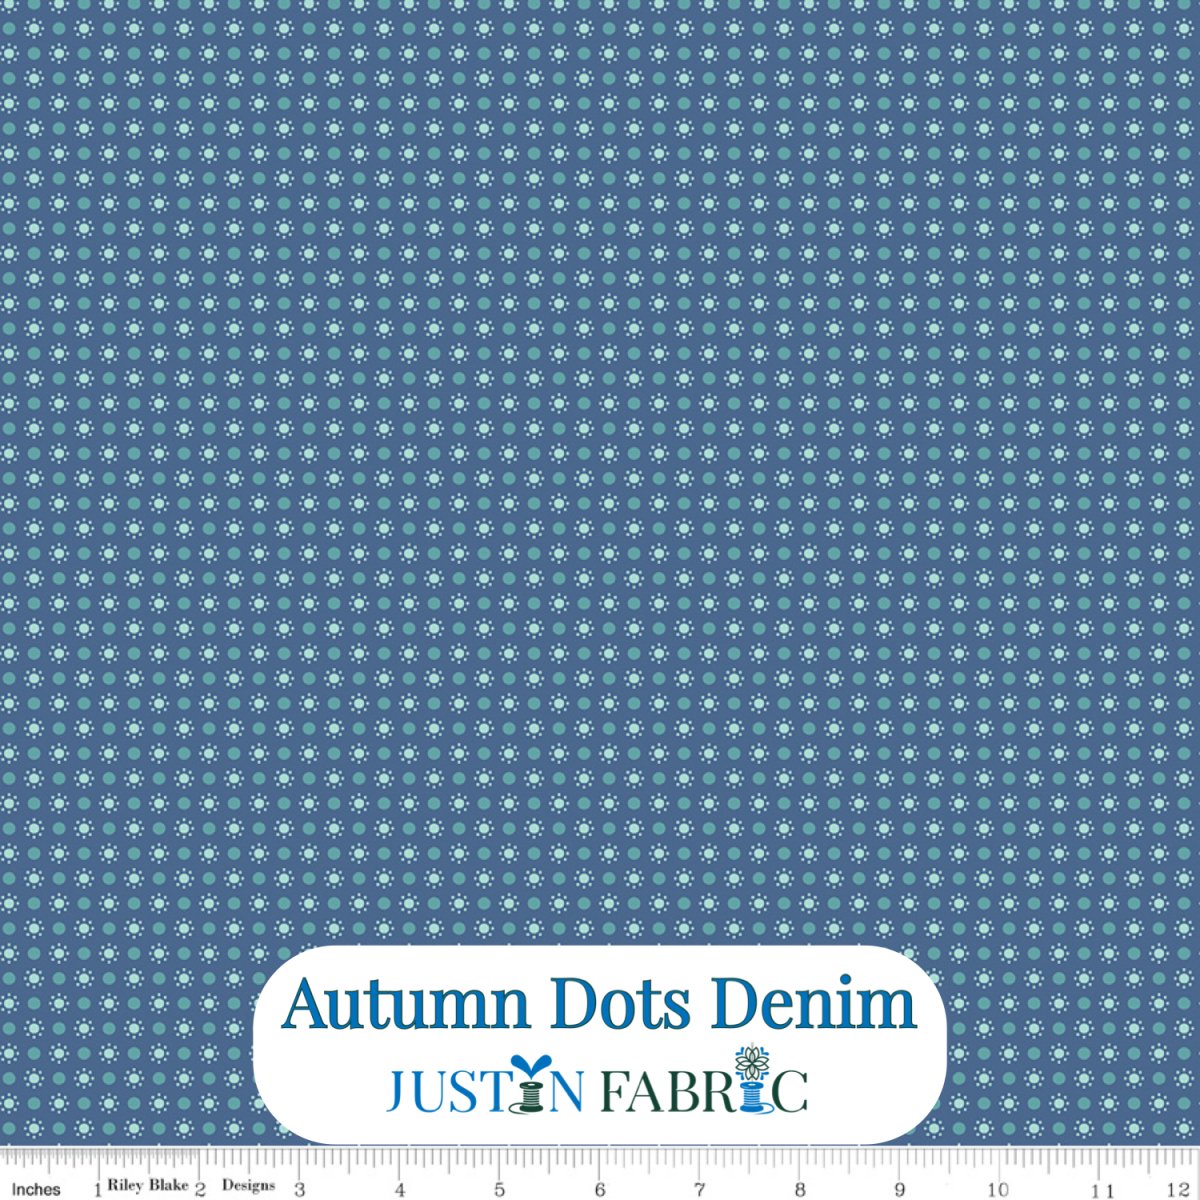 Autumn Dots Denim Cotton Yardage by Lori Holt | Riley Blake Designs -C14657-DENIM - Justin Fabric!